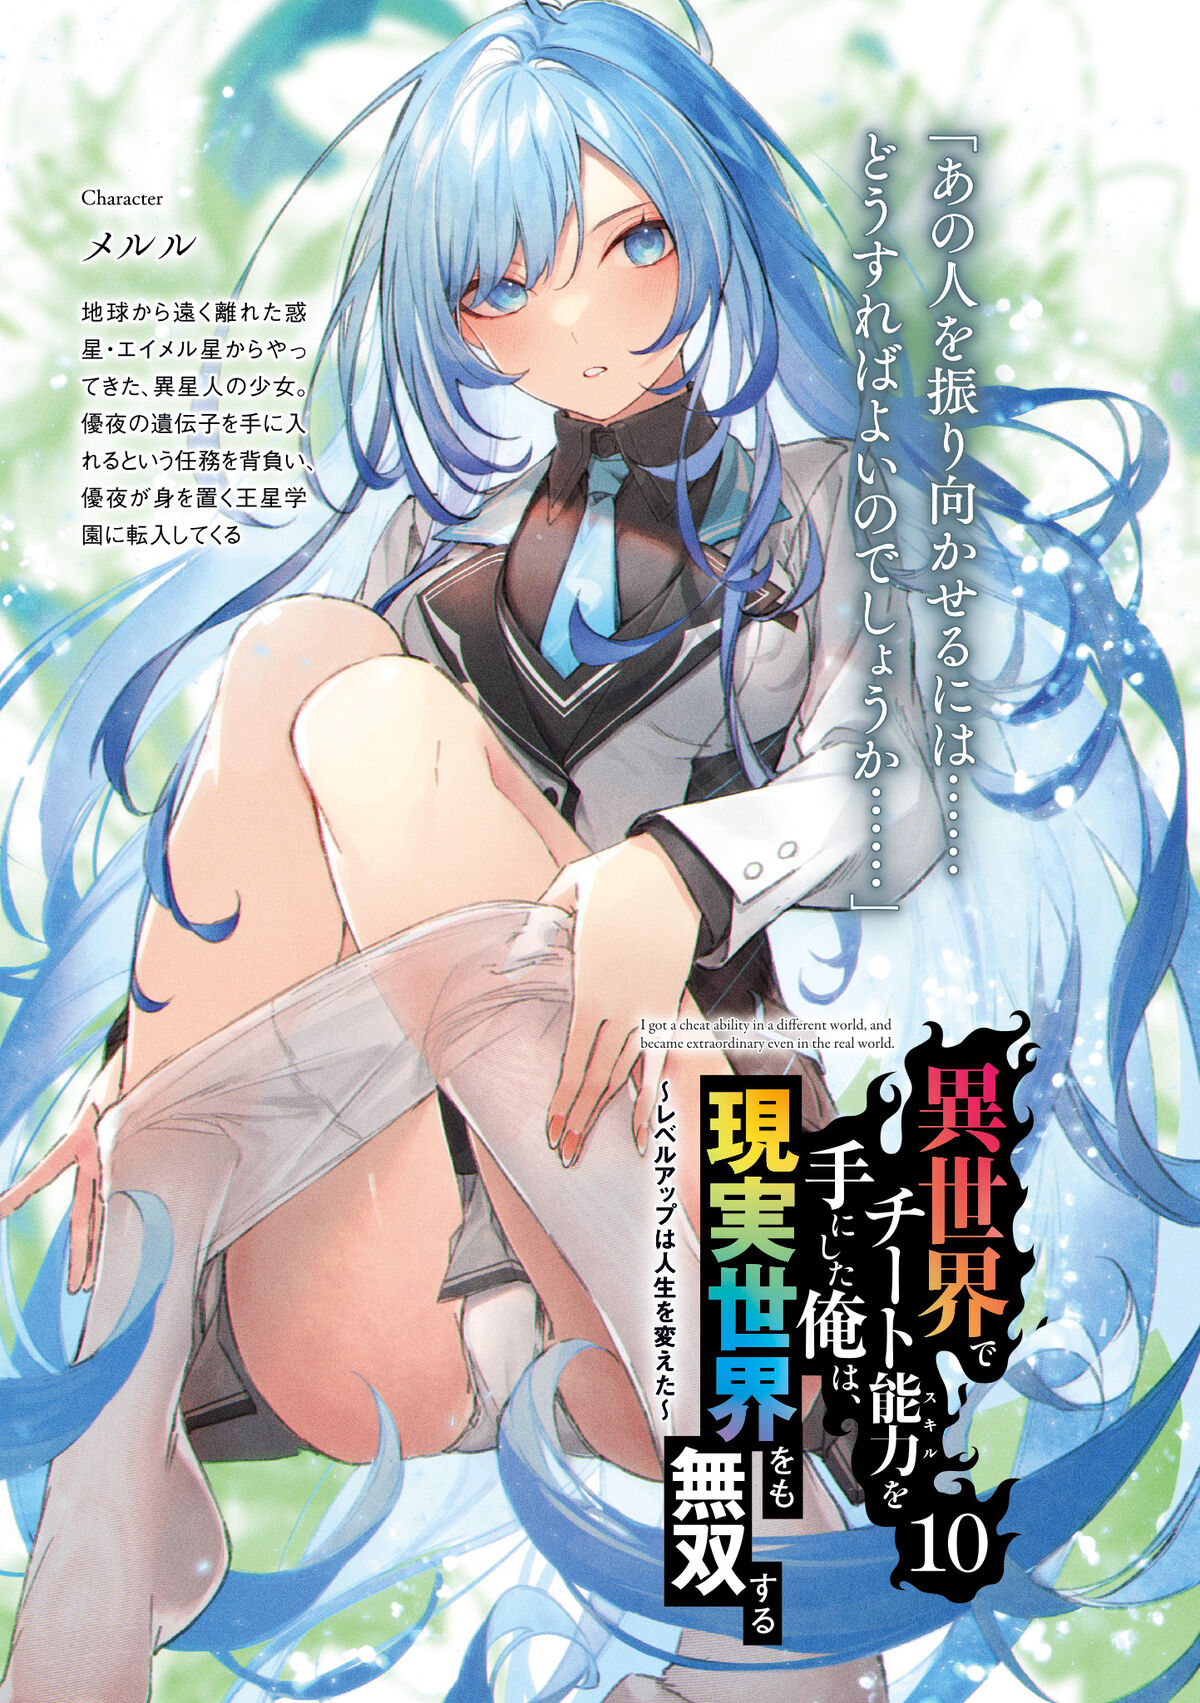 Light Novel Volume 9, Cheat Musou Wiki